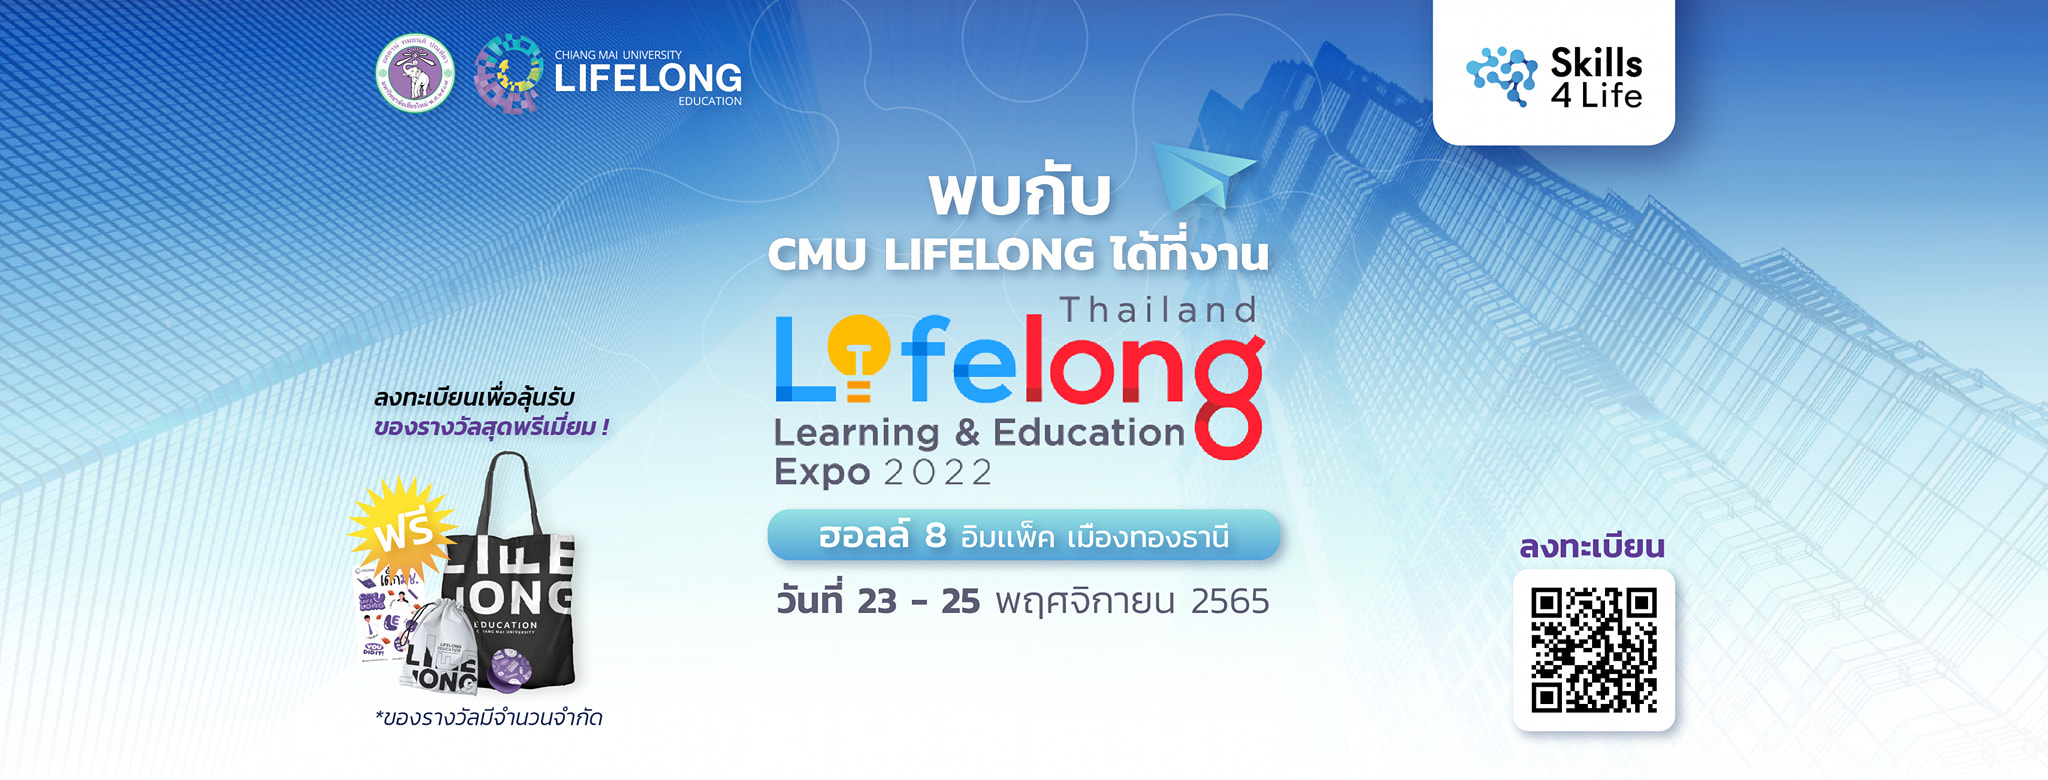 CMU Lifelong ในงานThailand Lifelong Learning & Education Expo 